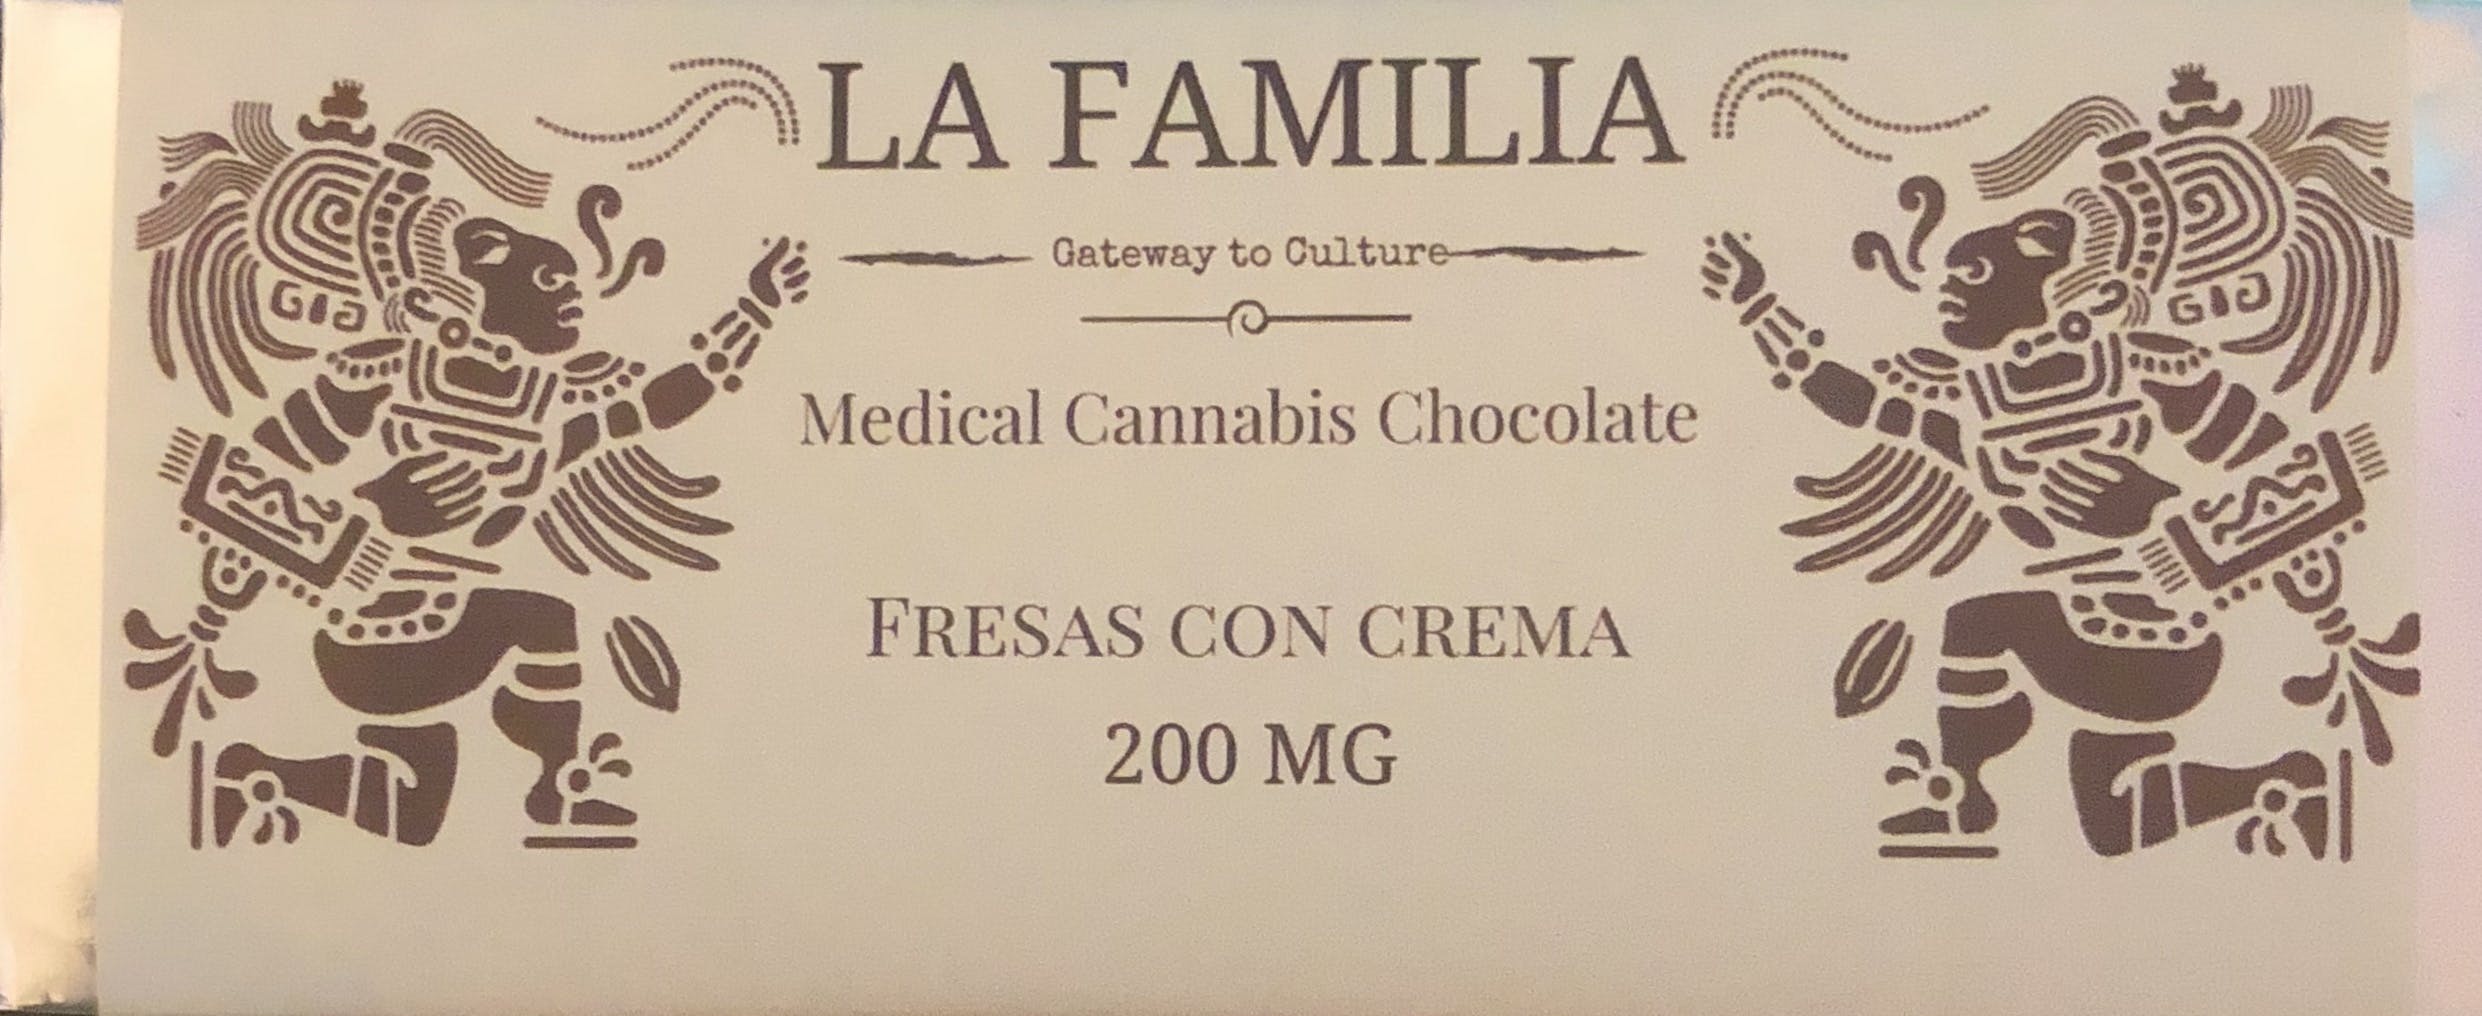 marijuana-dispensaries-420-friends-in-temecula-la-familia-200mg-fresas-con-crema